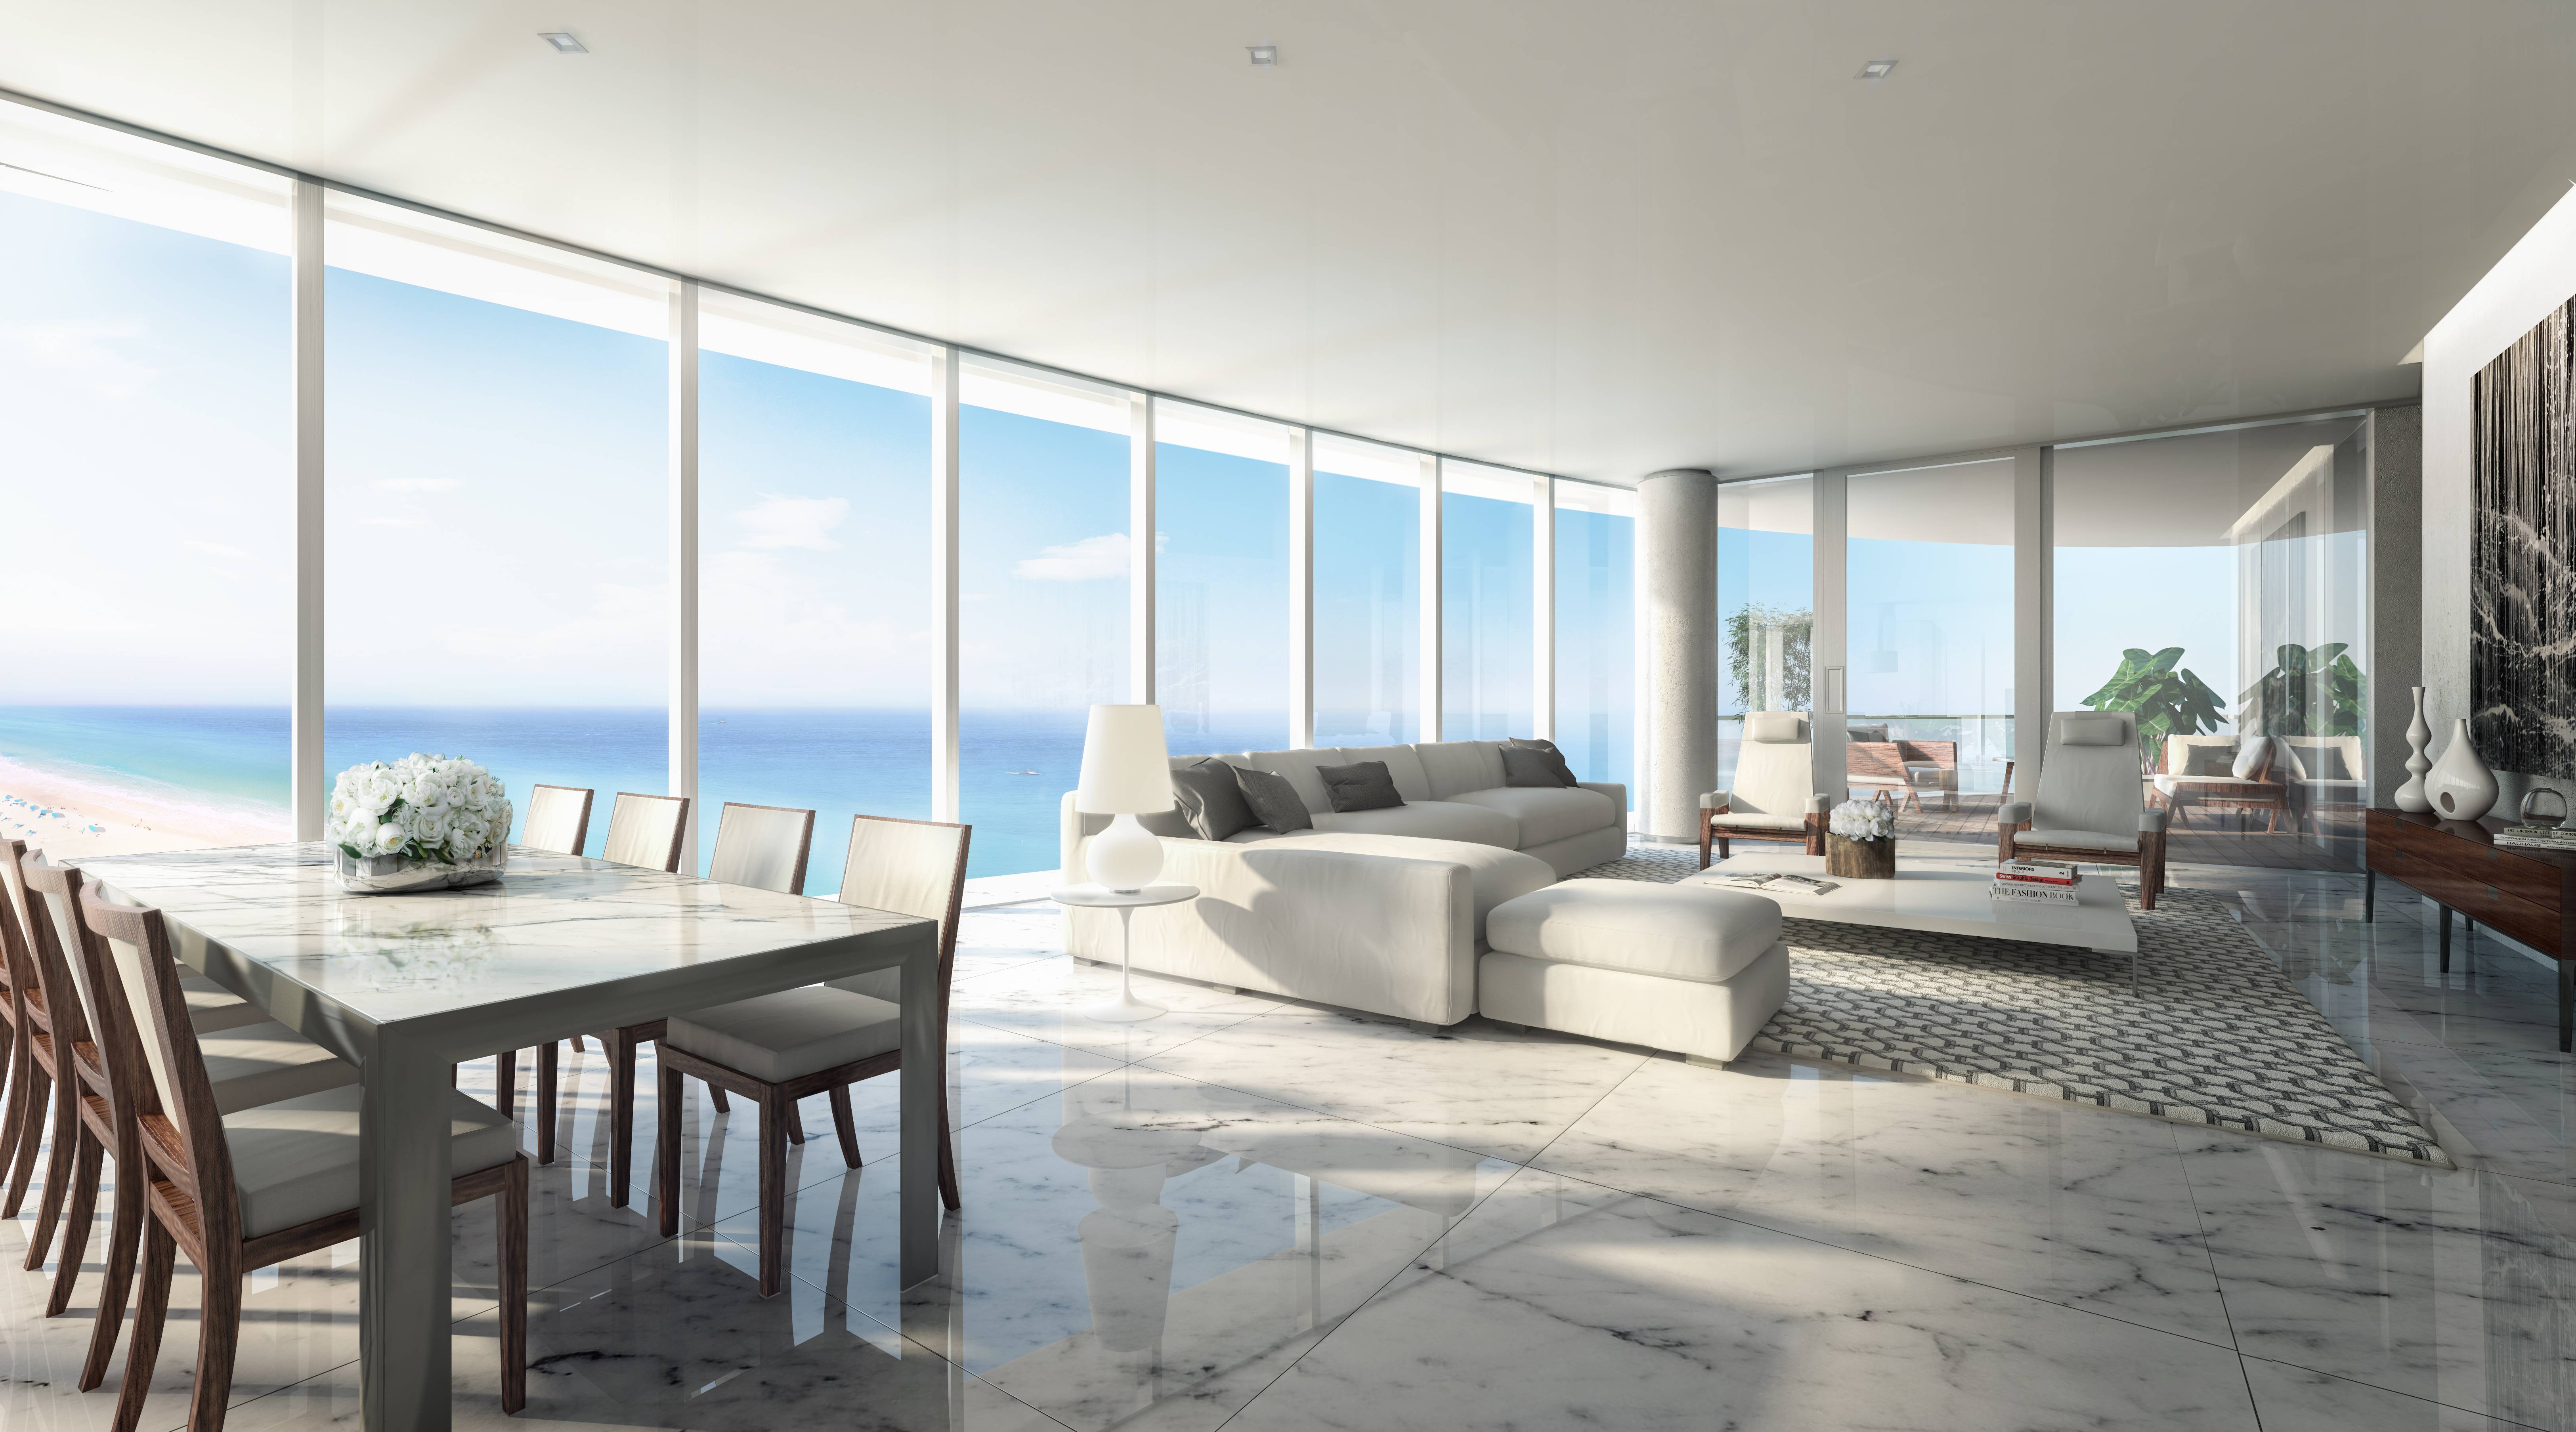 Mia Ritz Carlton Sunny Isles Sells Record Breaking Penthouse